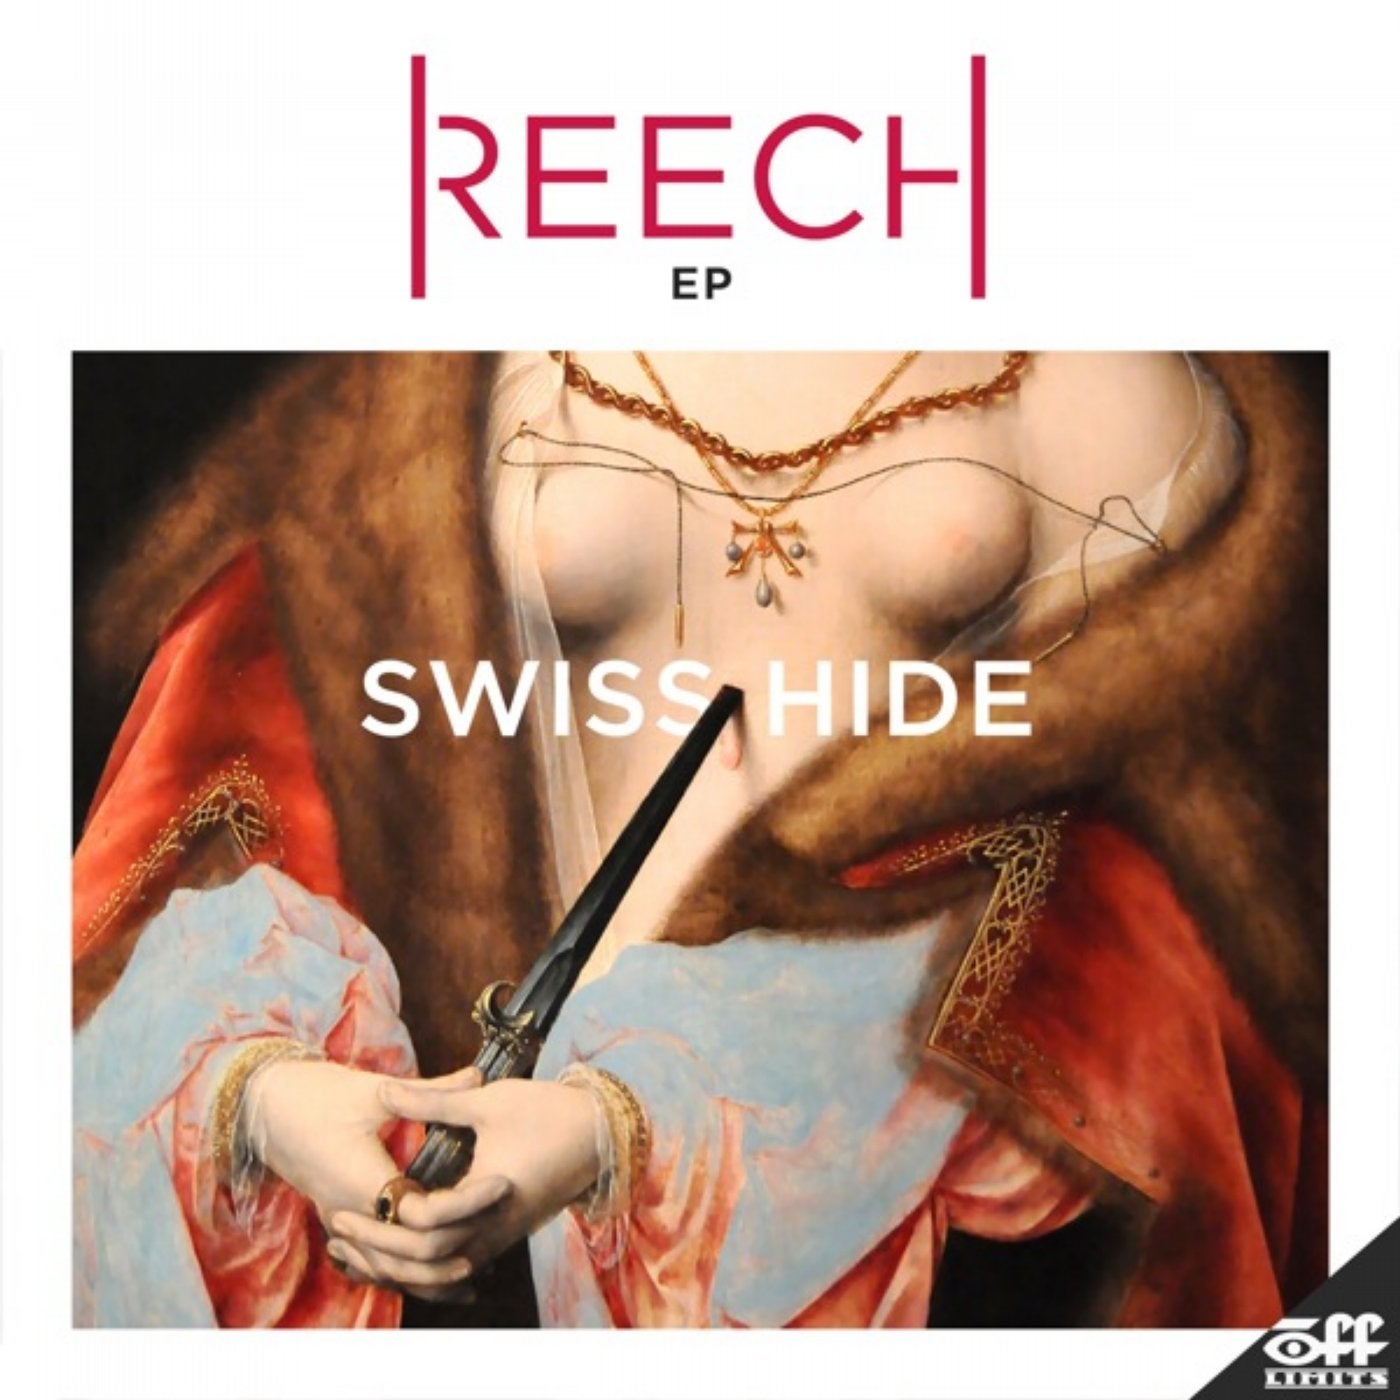 Swiss Hide EP